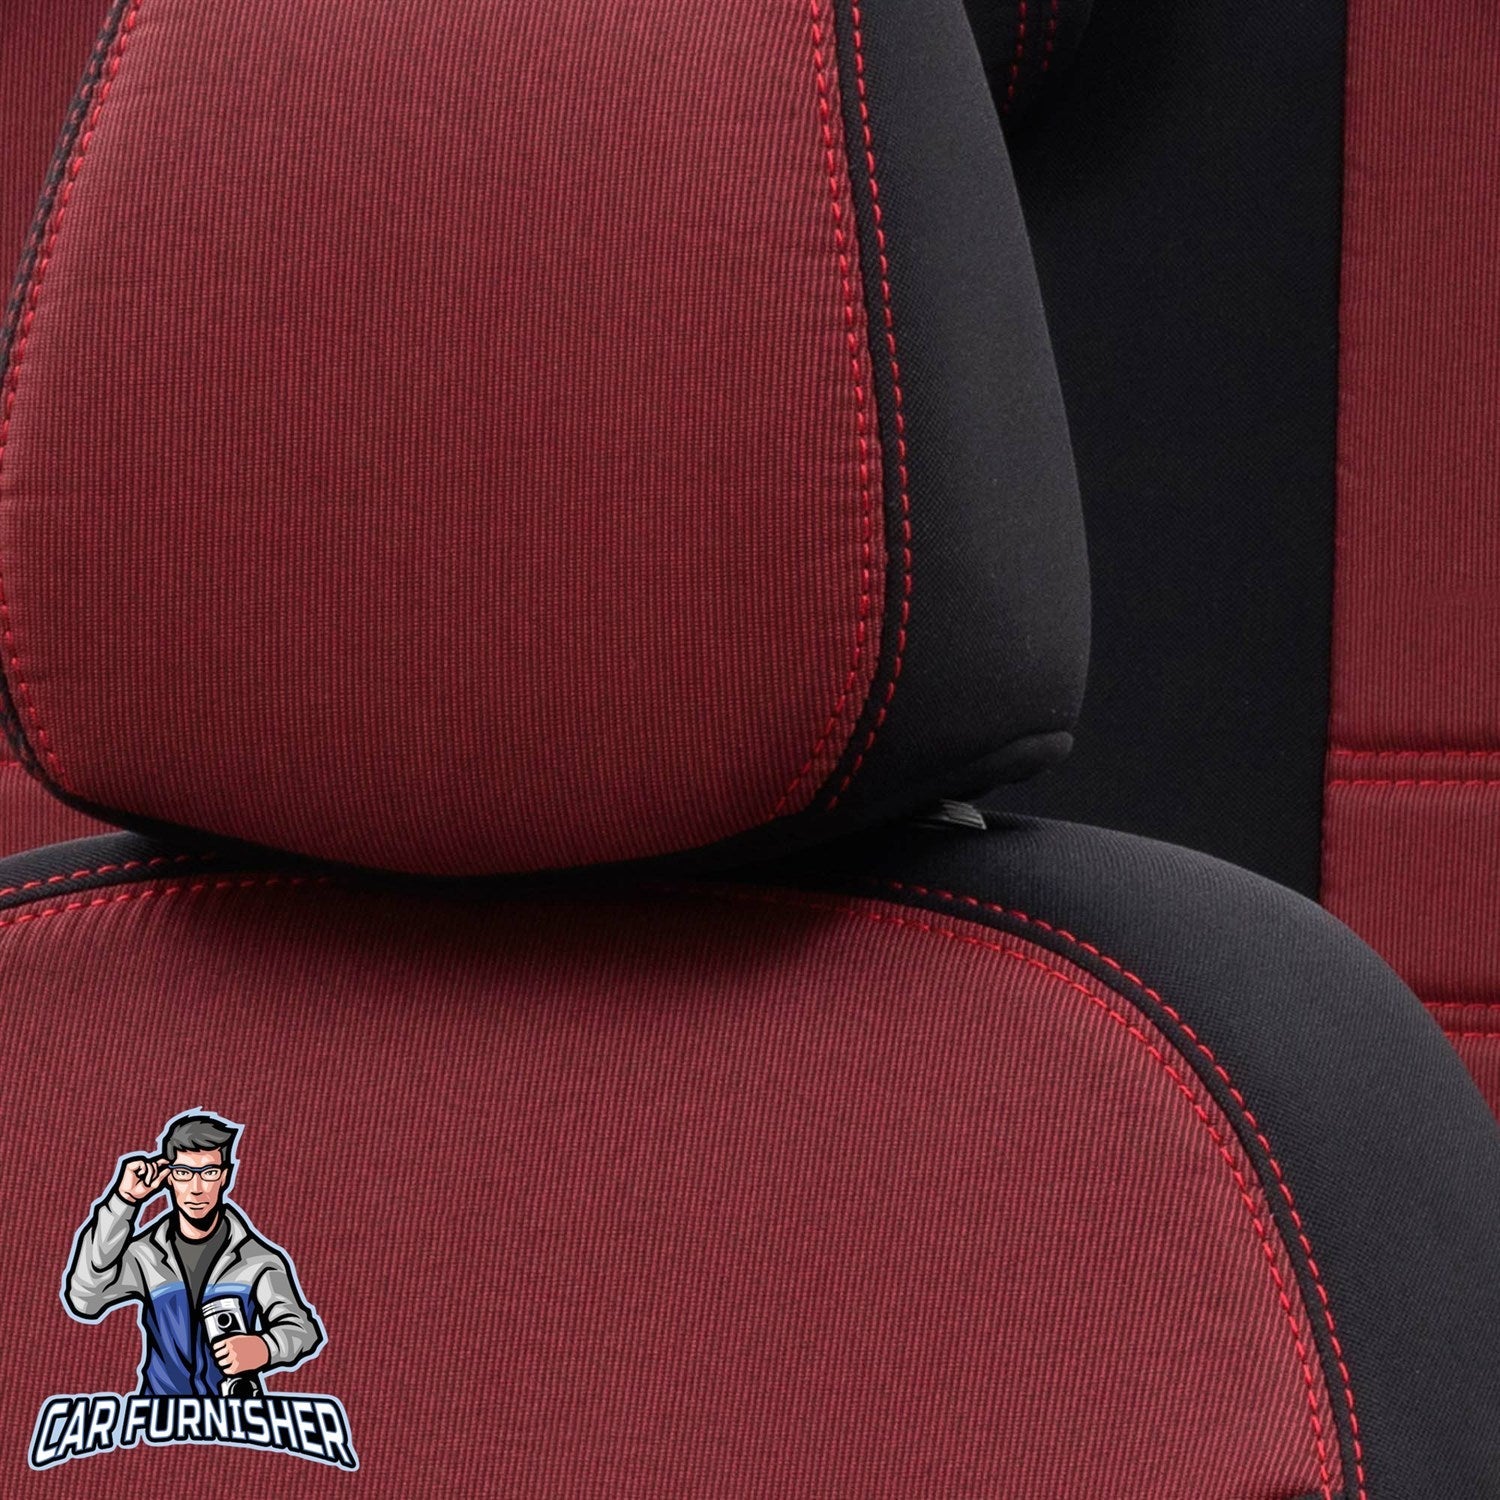 Mazda E2200 Seat Covers Original Jacquard Design Red Jacquard Fabric